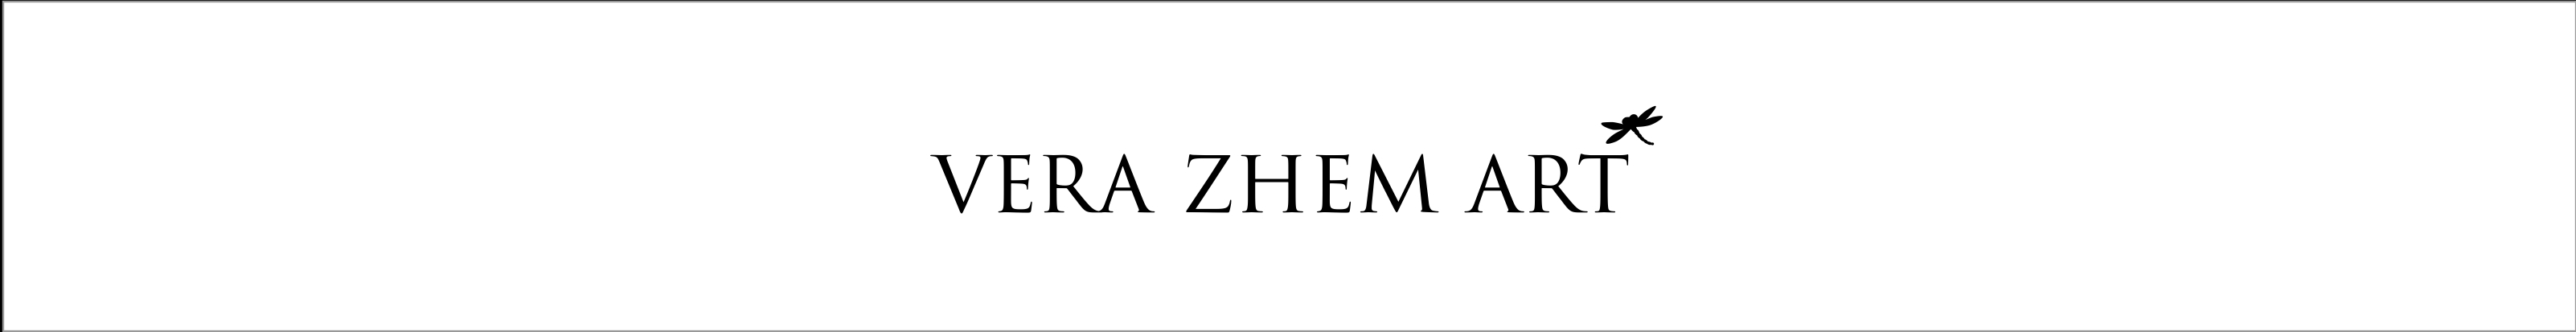 Vera Zhem のプロファイルバナー